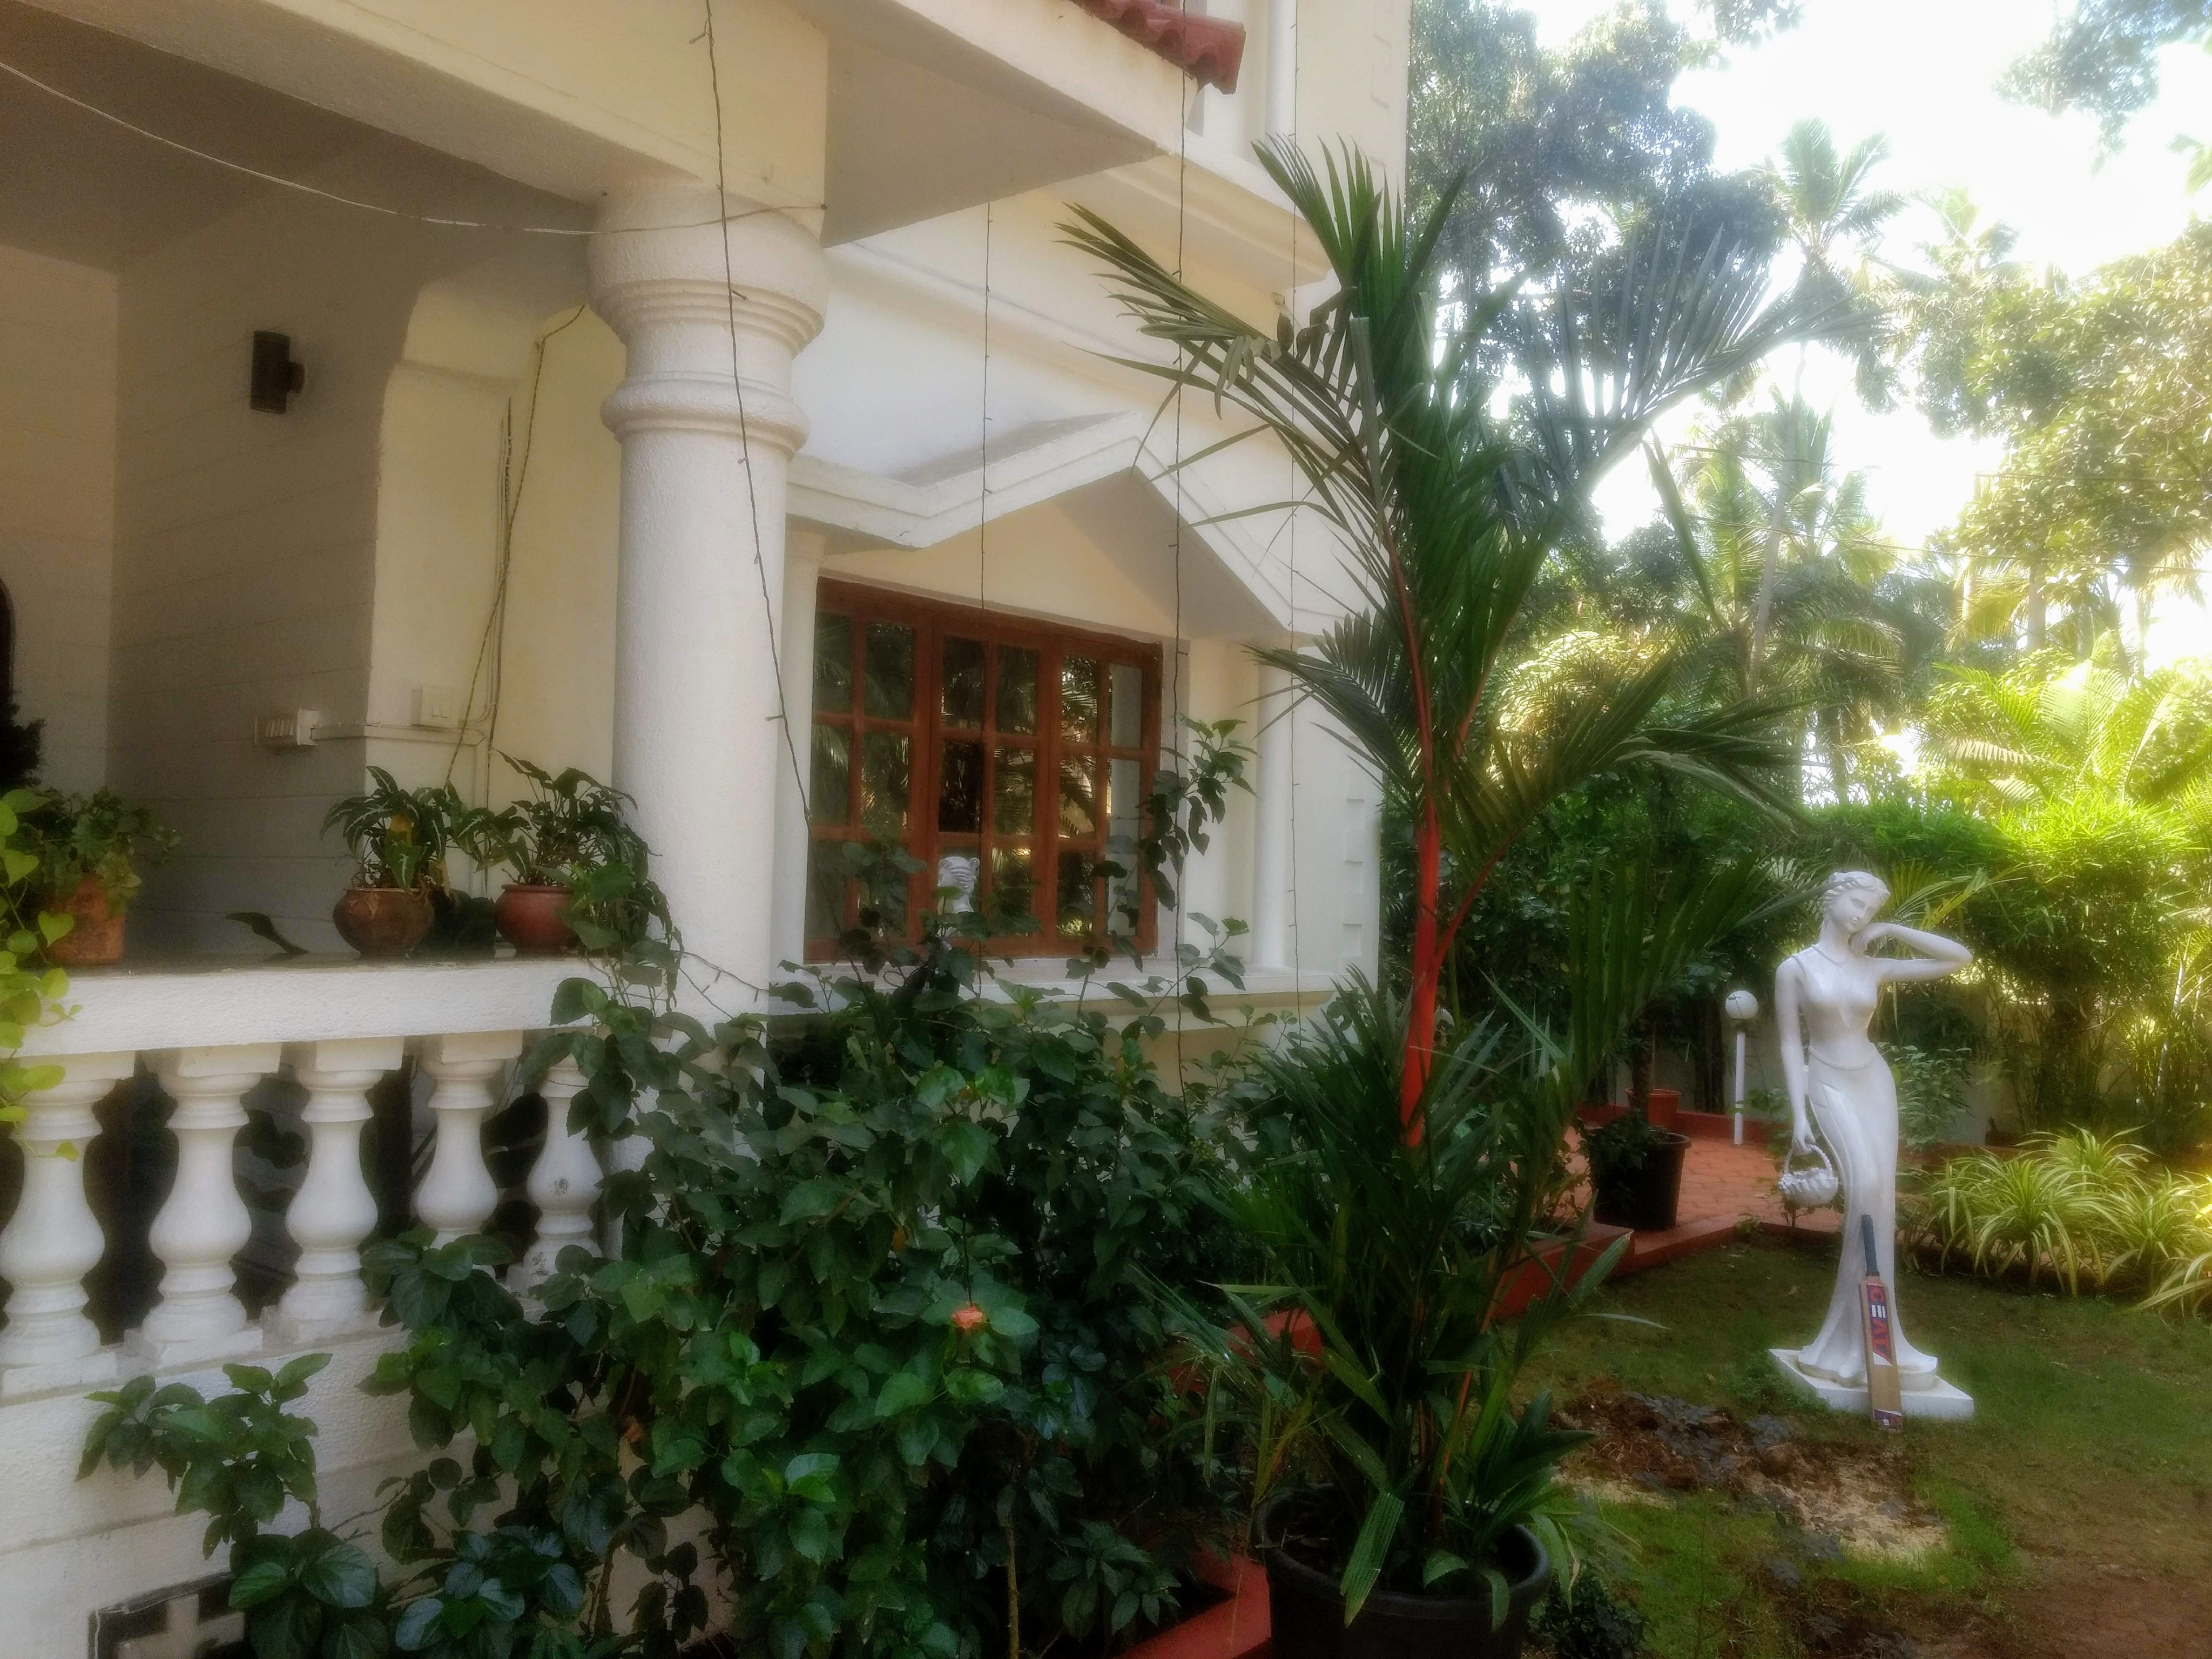 Pinnacle Holiday Homes, Arpora, Goa, India